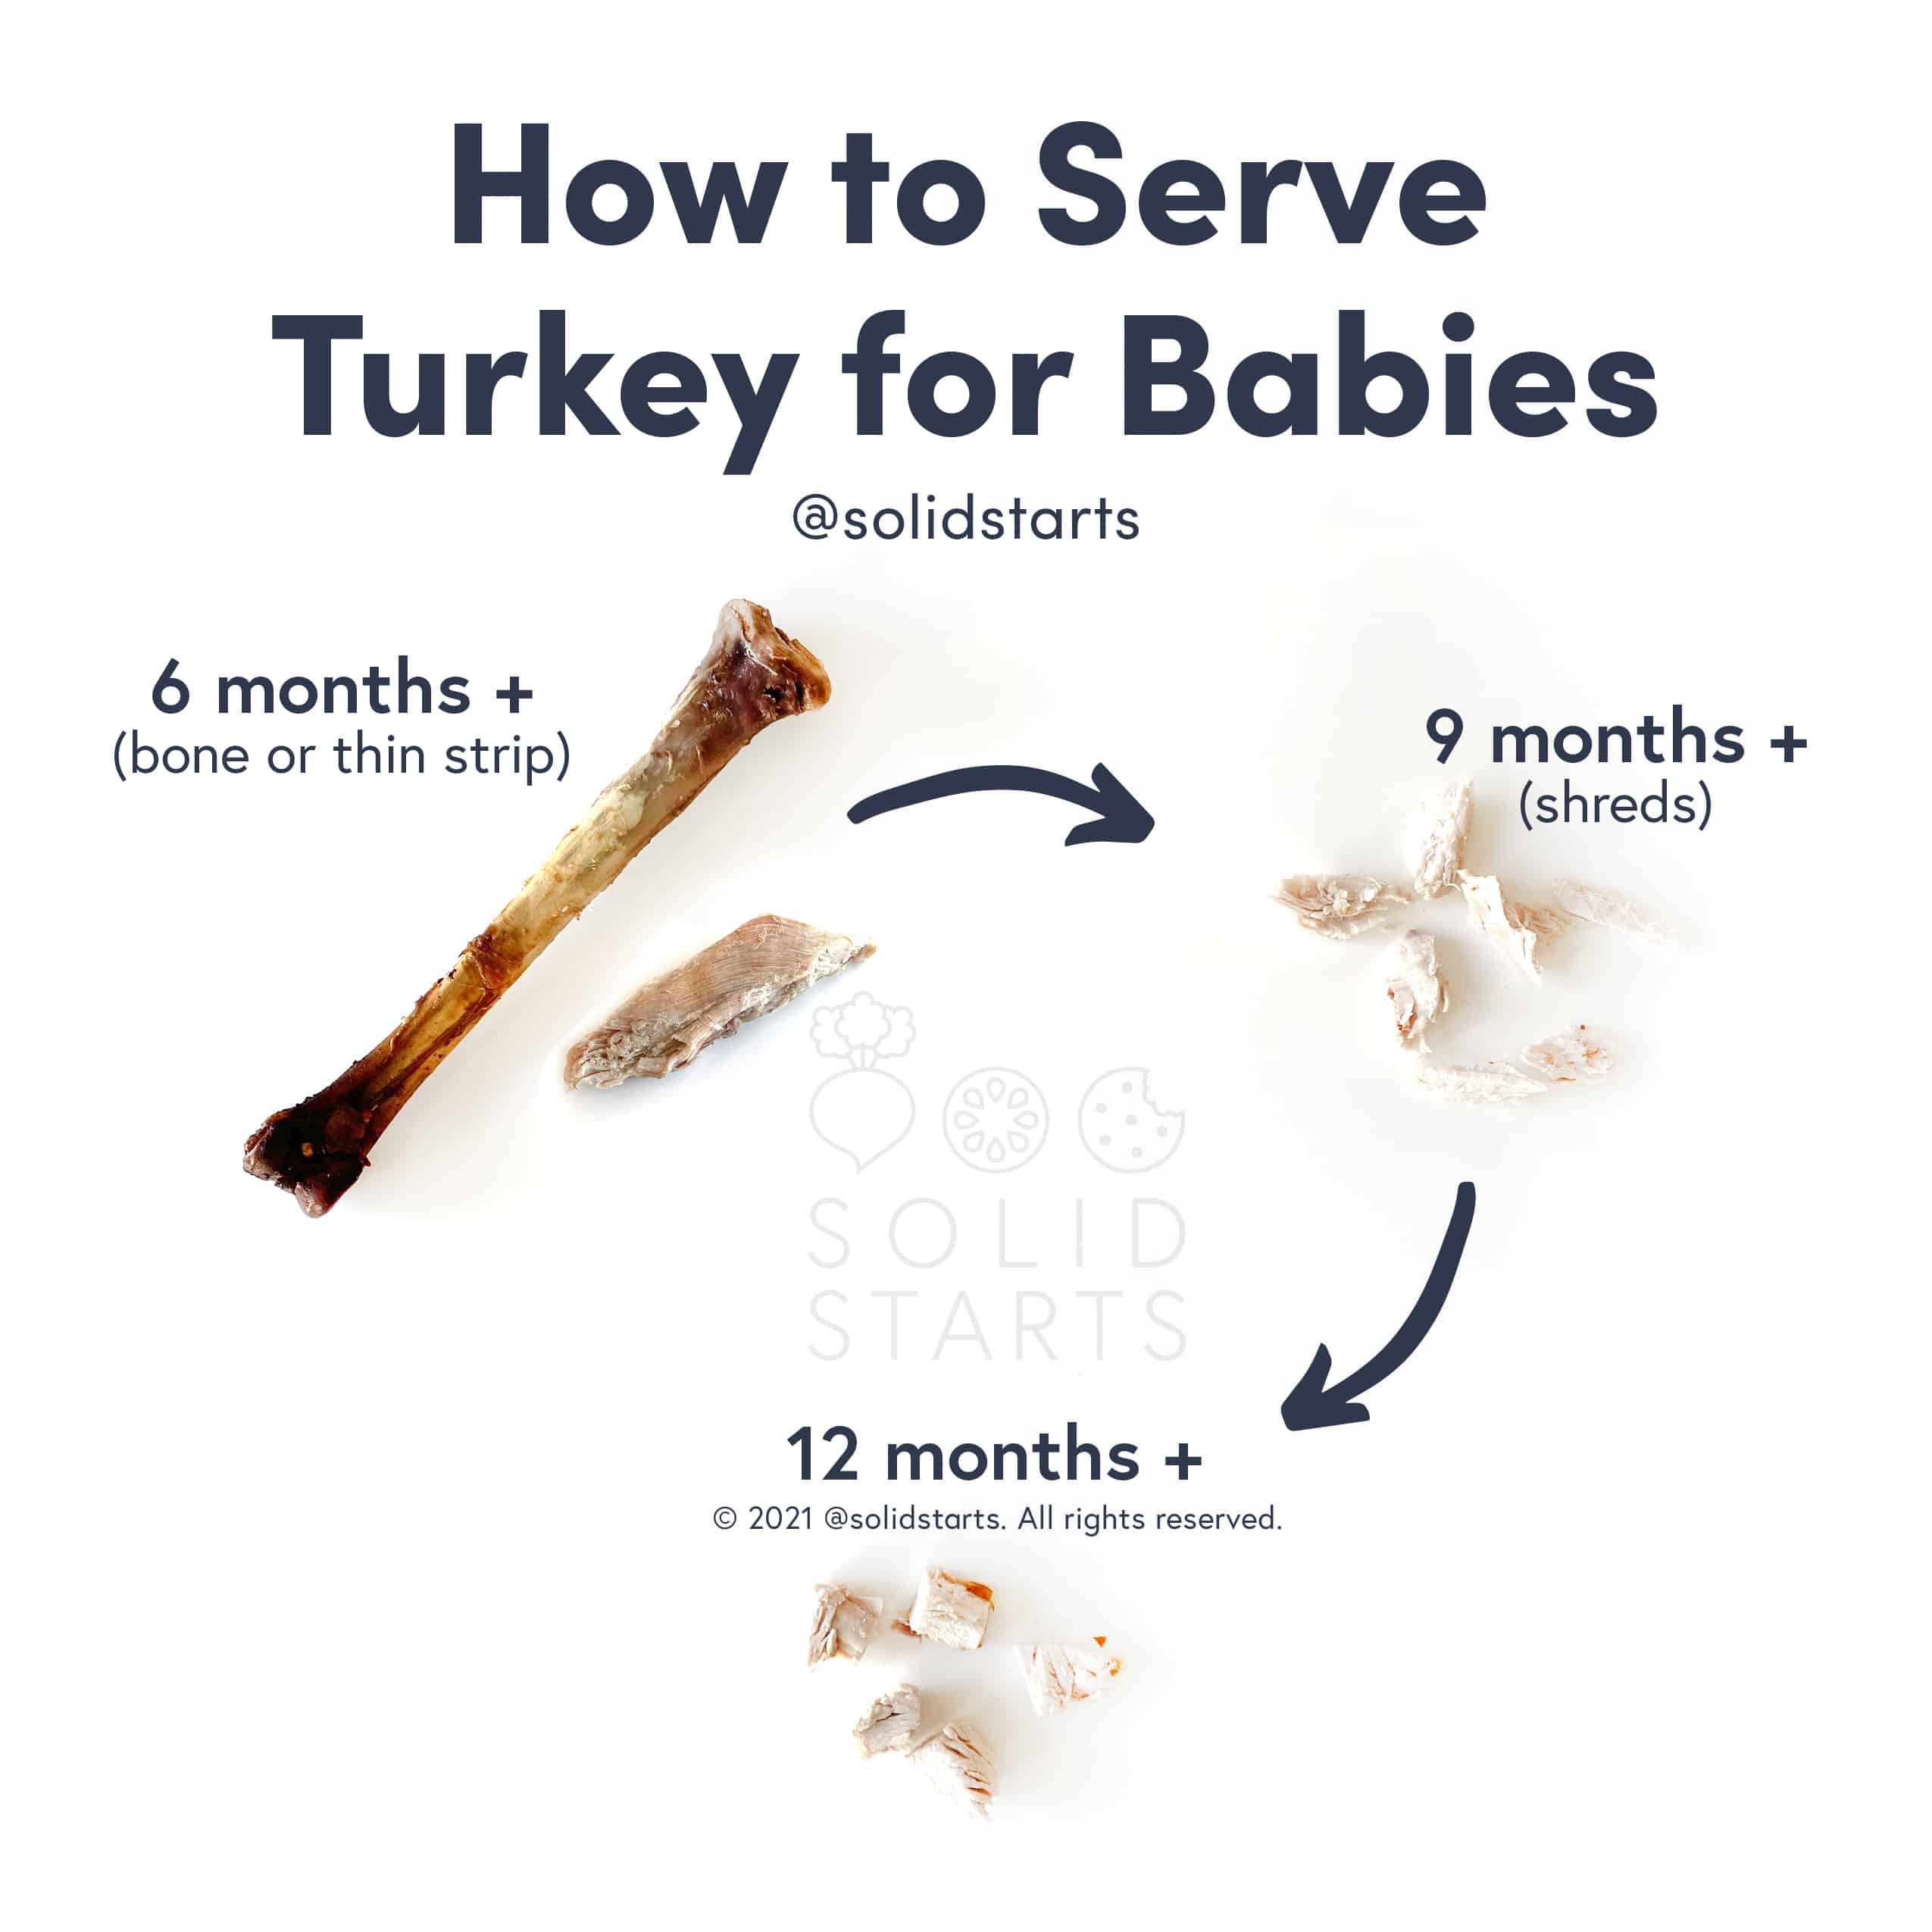 https://images.ctfassets.net/ruek9xr8ihvu/6neoHku5ffZIvTRmCp6z0t/208574ac88734c42218e070900c4b5f3/How-to-Serve-Turkey-for-Babies-1.jpg